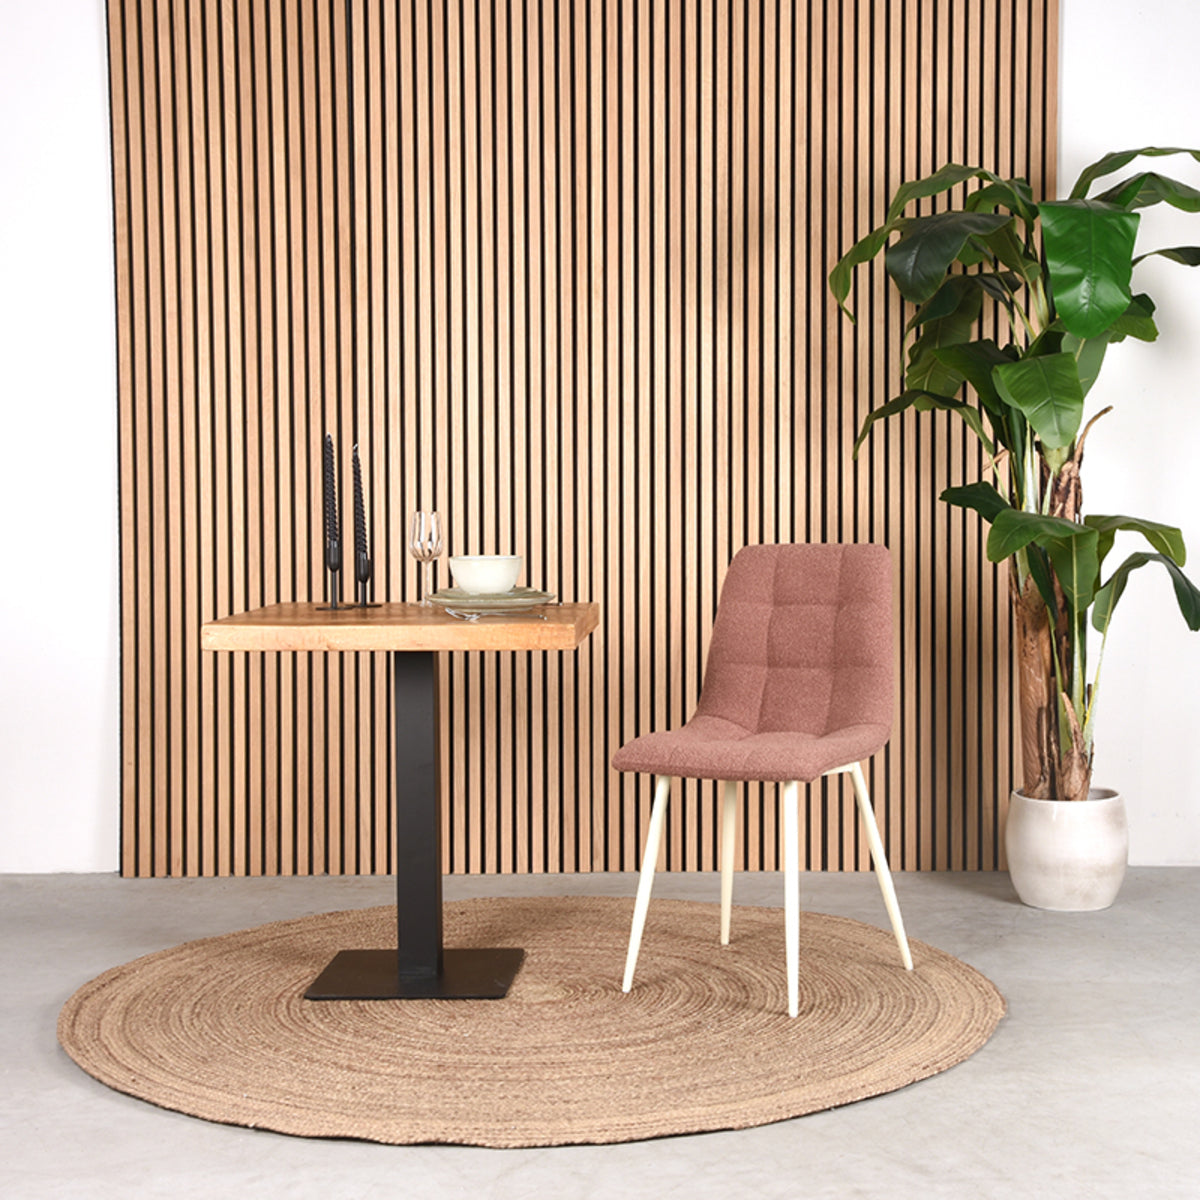 LABEL51 Dining room chair Nino - Terra - Boucle | 2 pcs